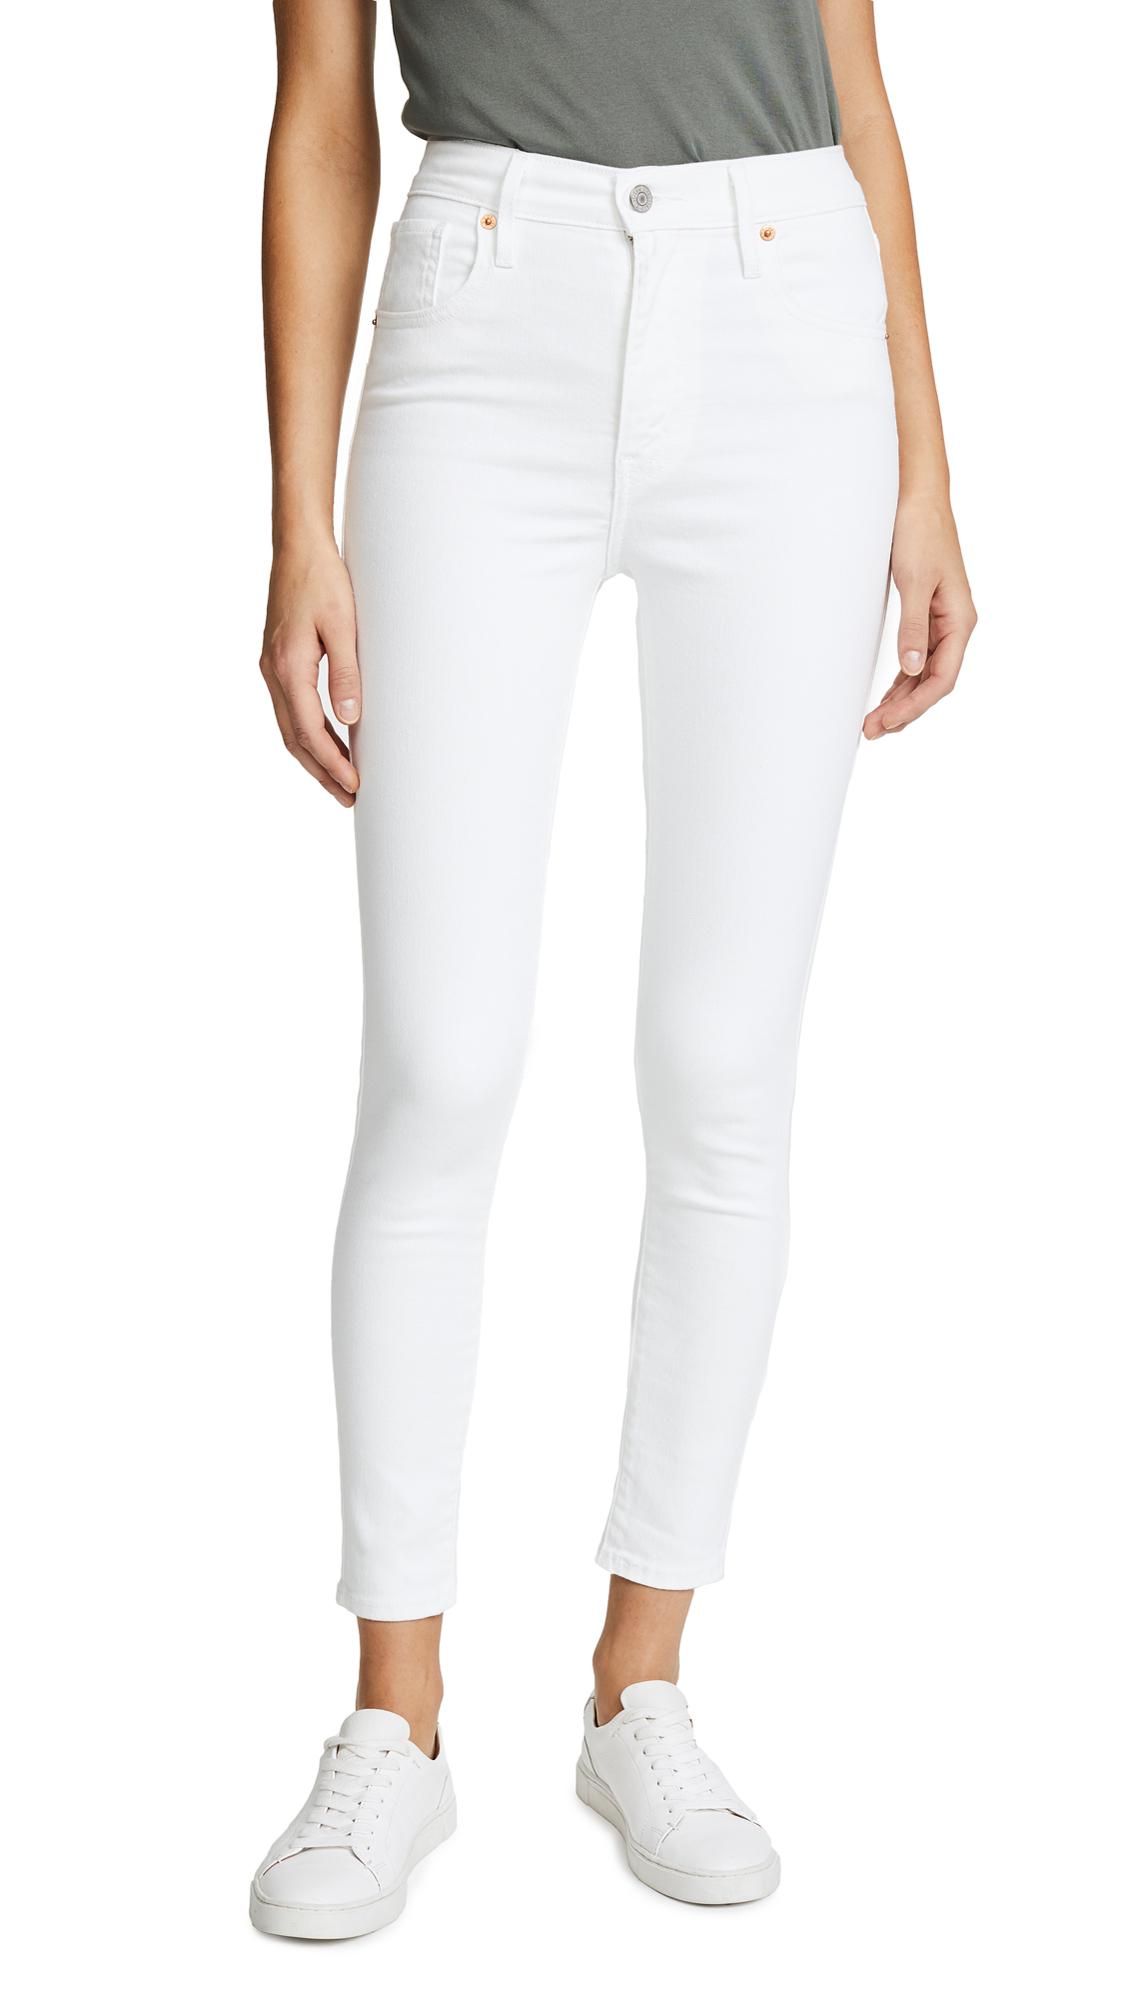 Levi's Denim Mile High Ankle Super Skinny Jeans in White - Lyst